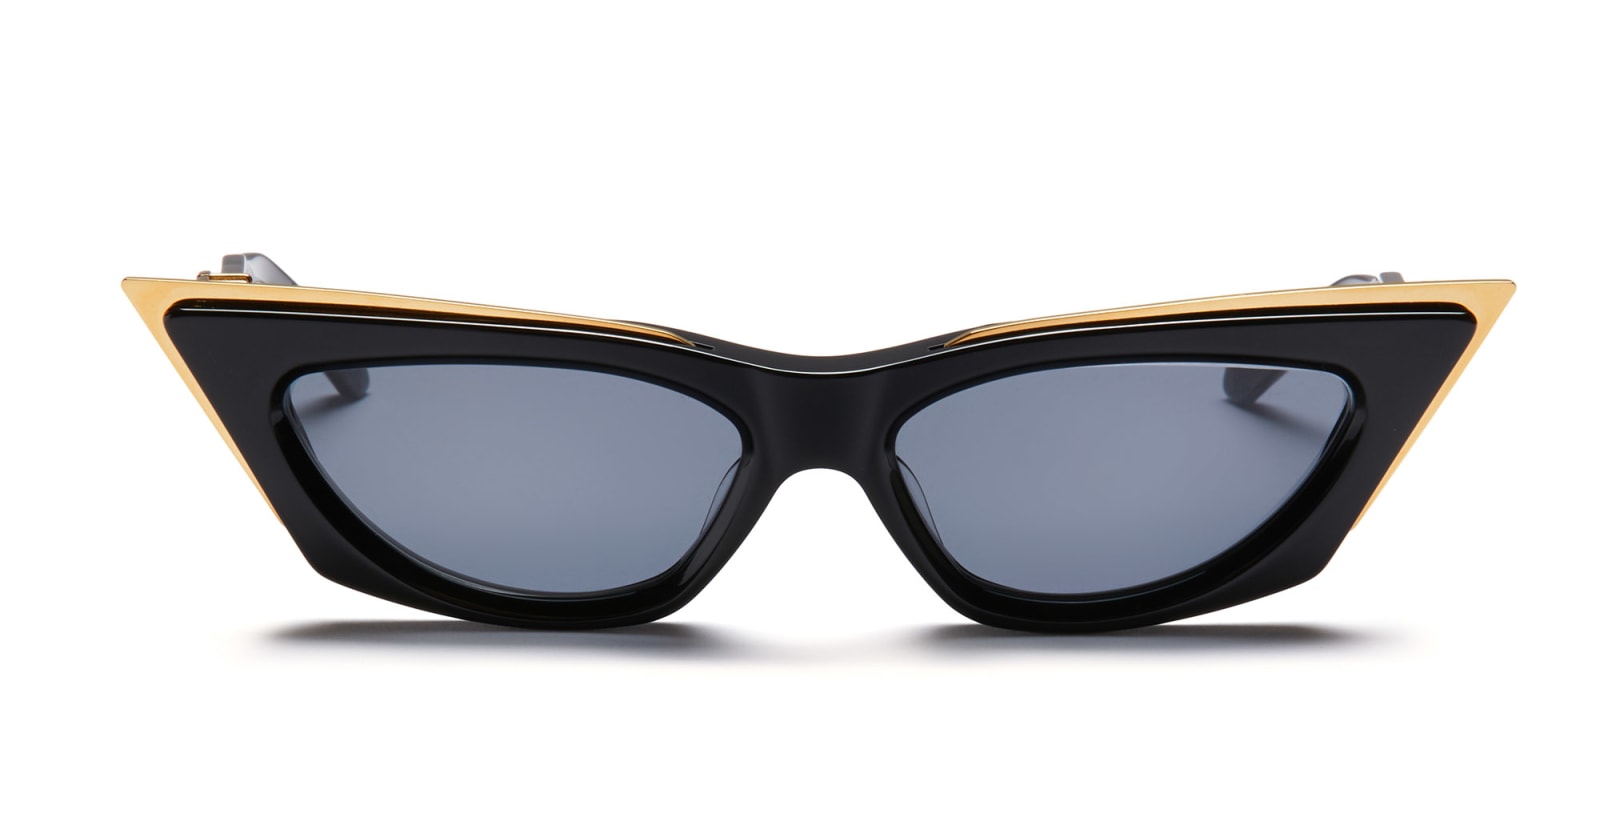 Valentino Goldcut-i - Black / Yellow Gold Sunglasses